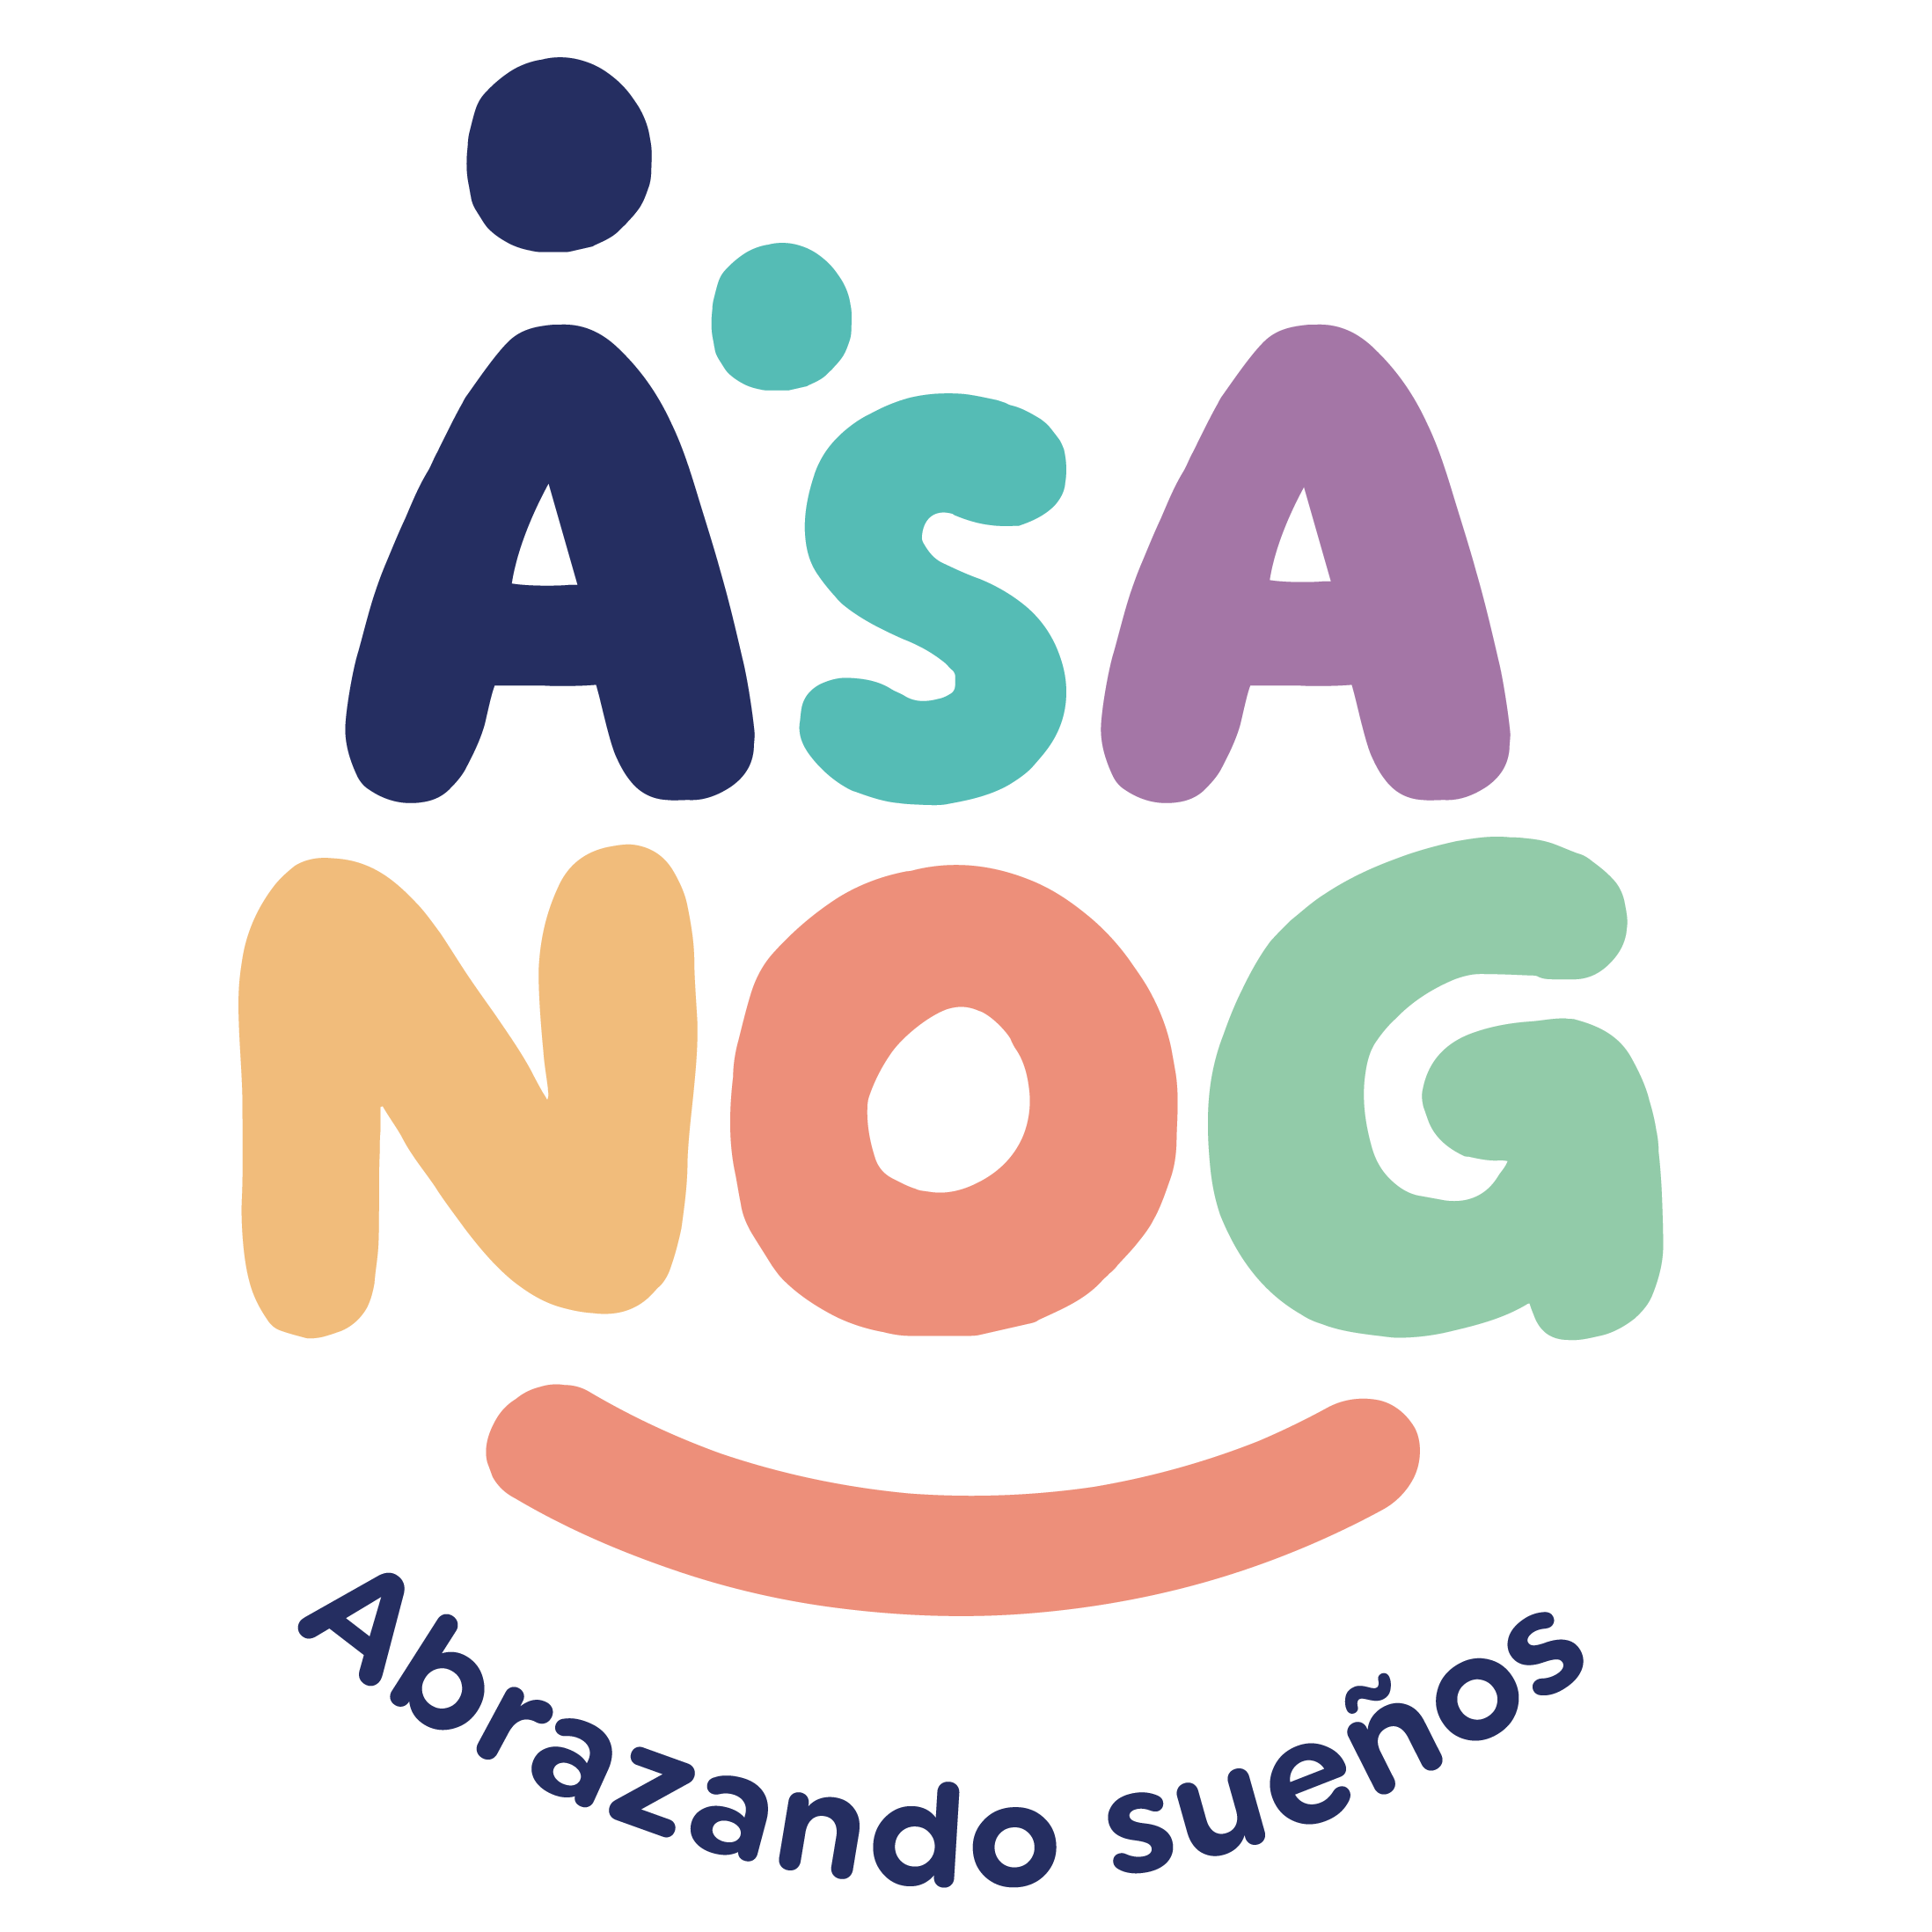 ASANOG - Asociación de Ayuda a Niños Oncológicos de Galicia Profile, news, ratings and communication